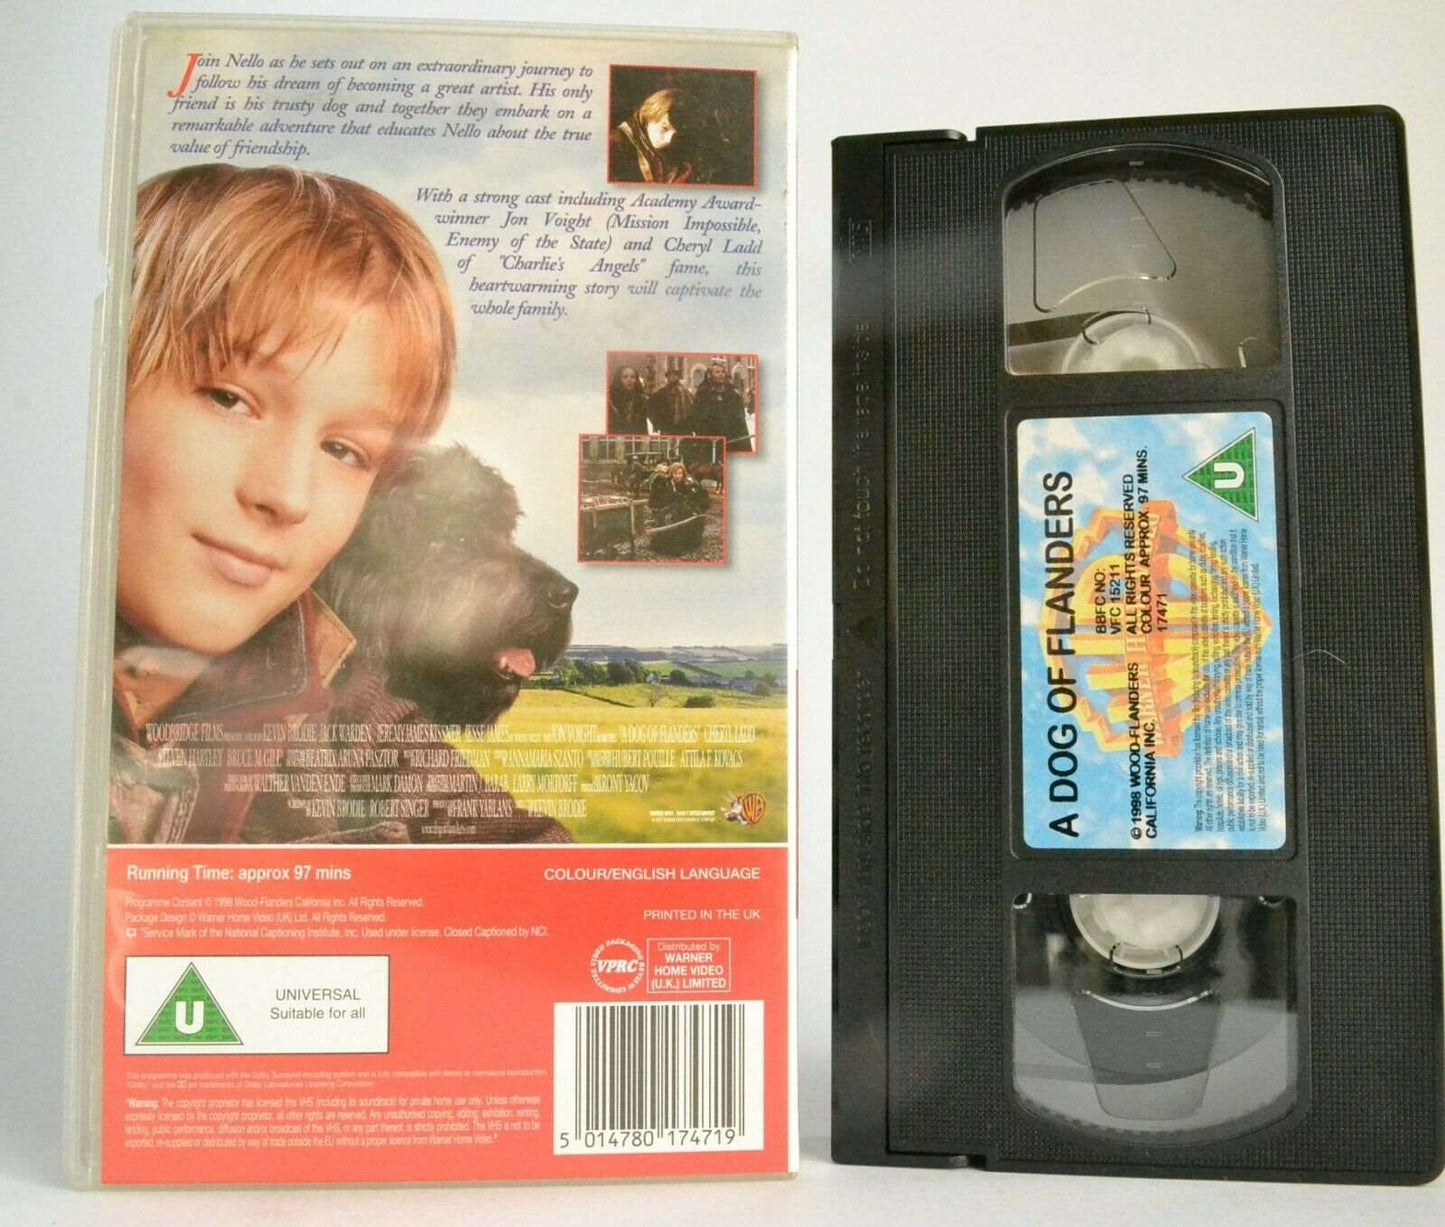 A Dog Of Flanders (1998): Family Adventure - Jon Voight / Cheryl Ladd - Pal VHS-